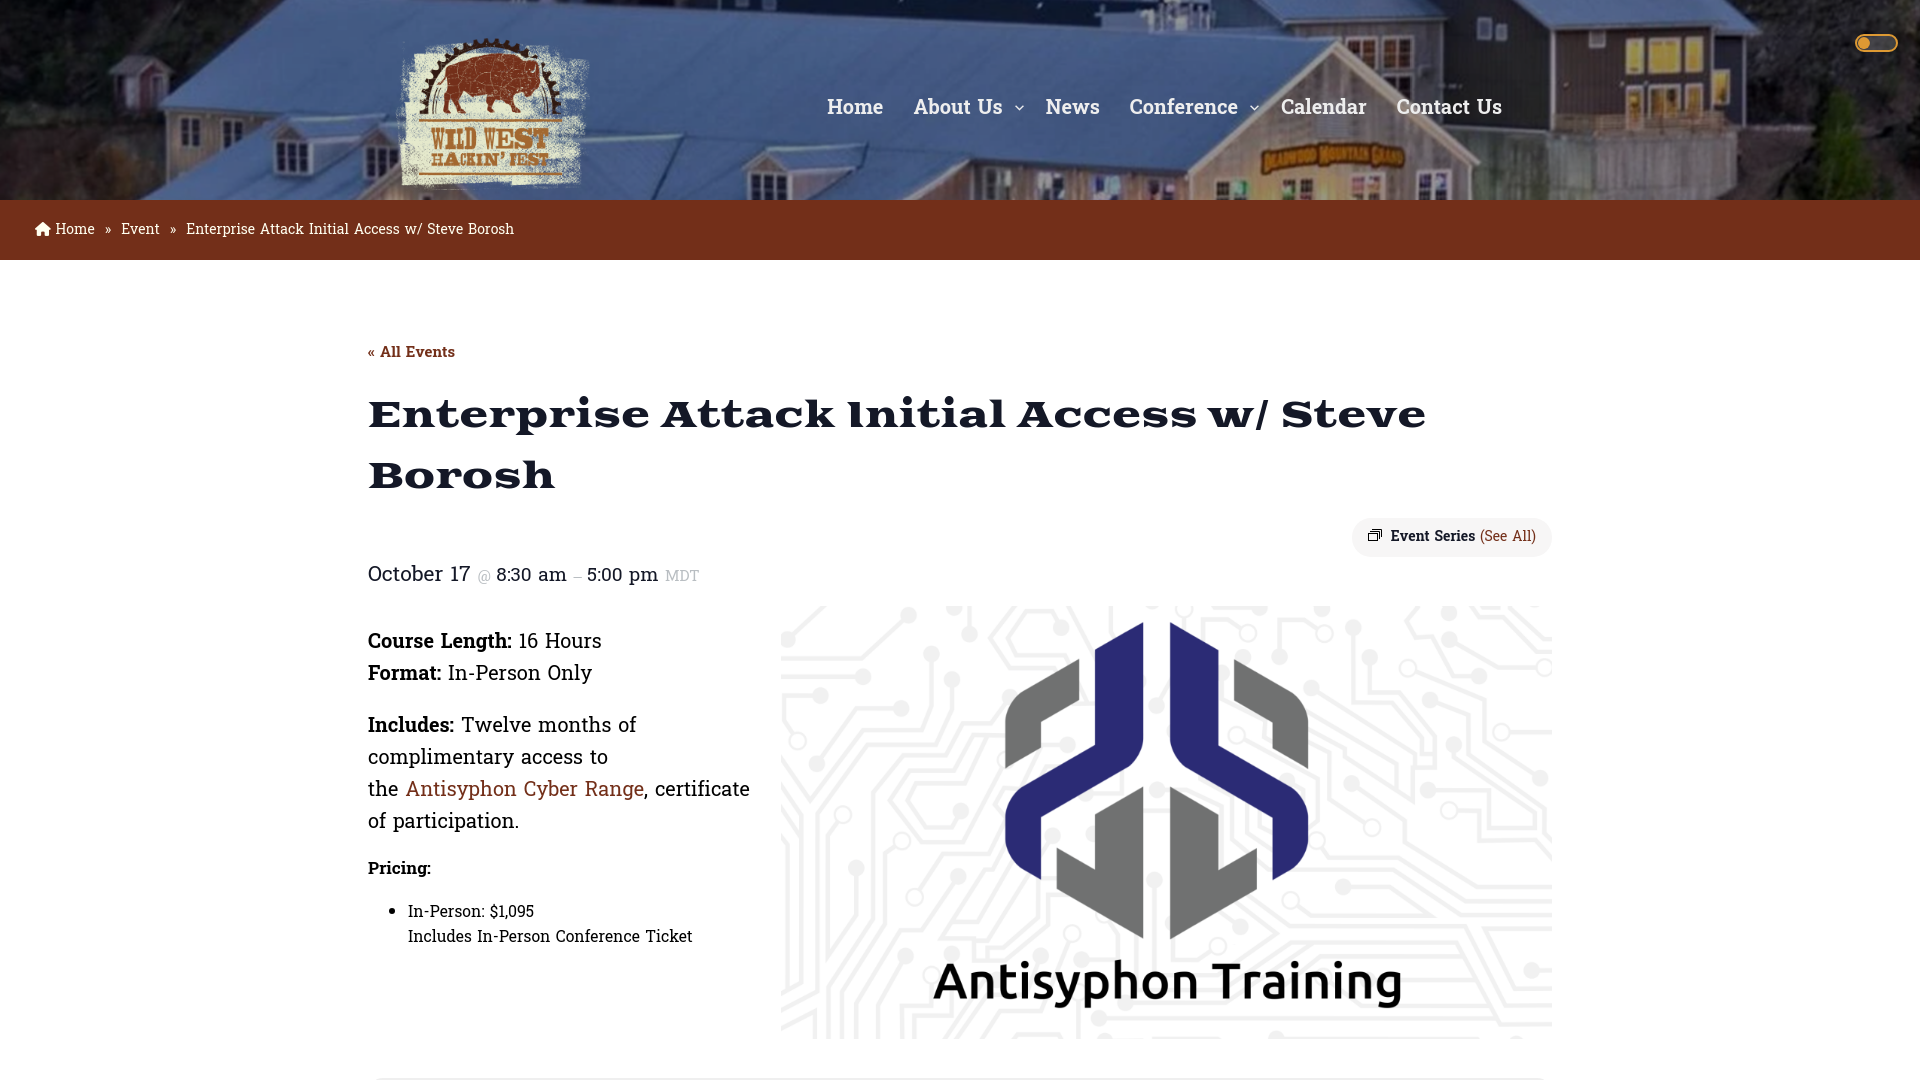 Enterprise Attack Initial Access w/ Steve Borosh – Wild West Hackin' Fest